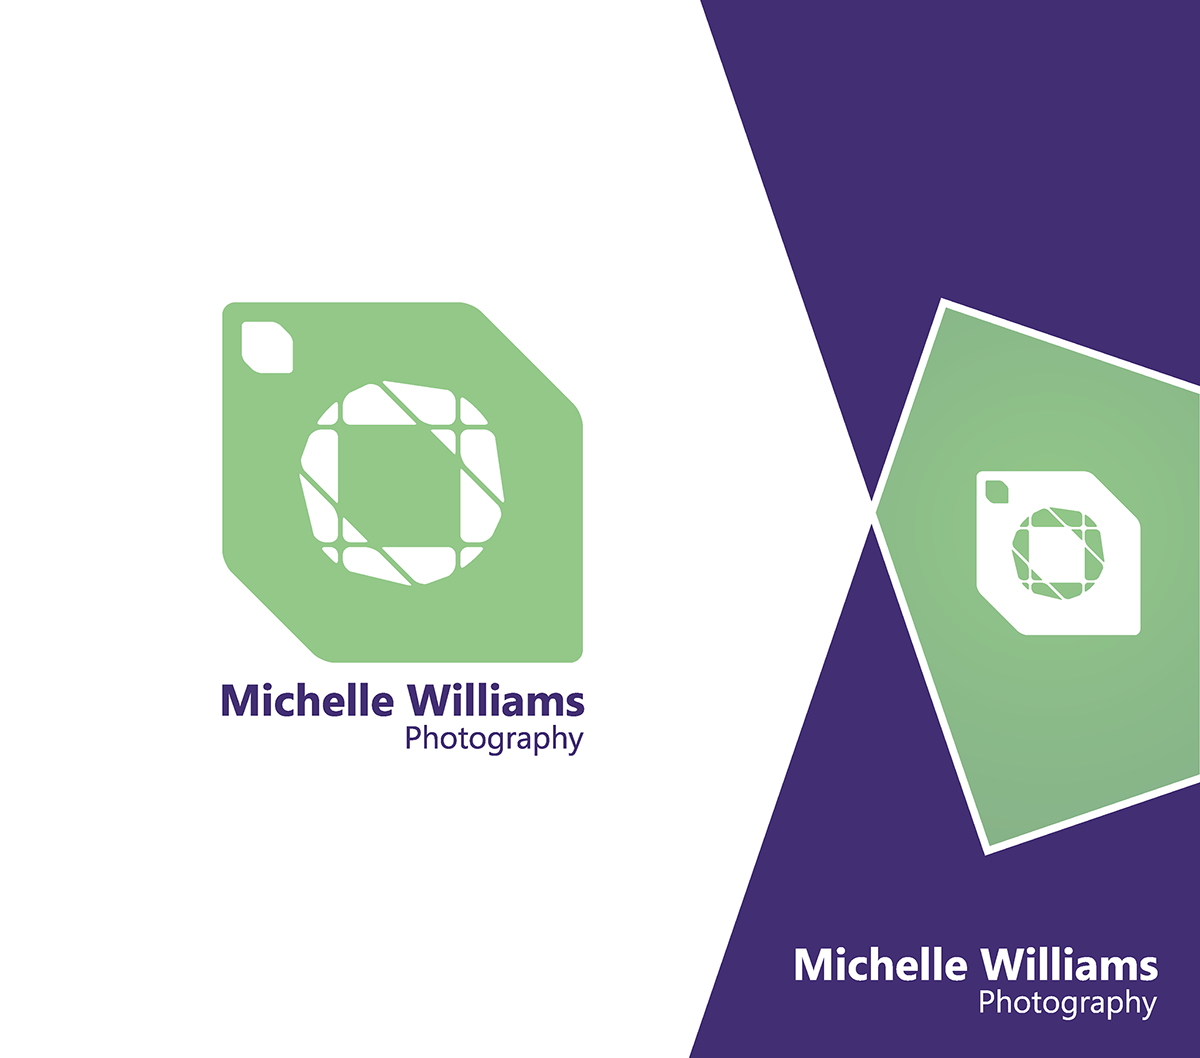 graphic design logo photographer Michelle williams camera lens watermark